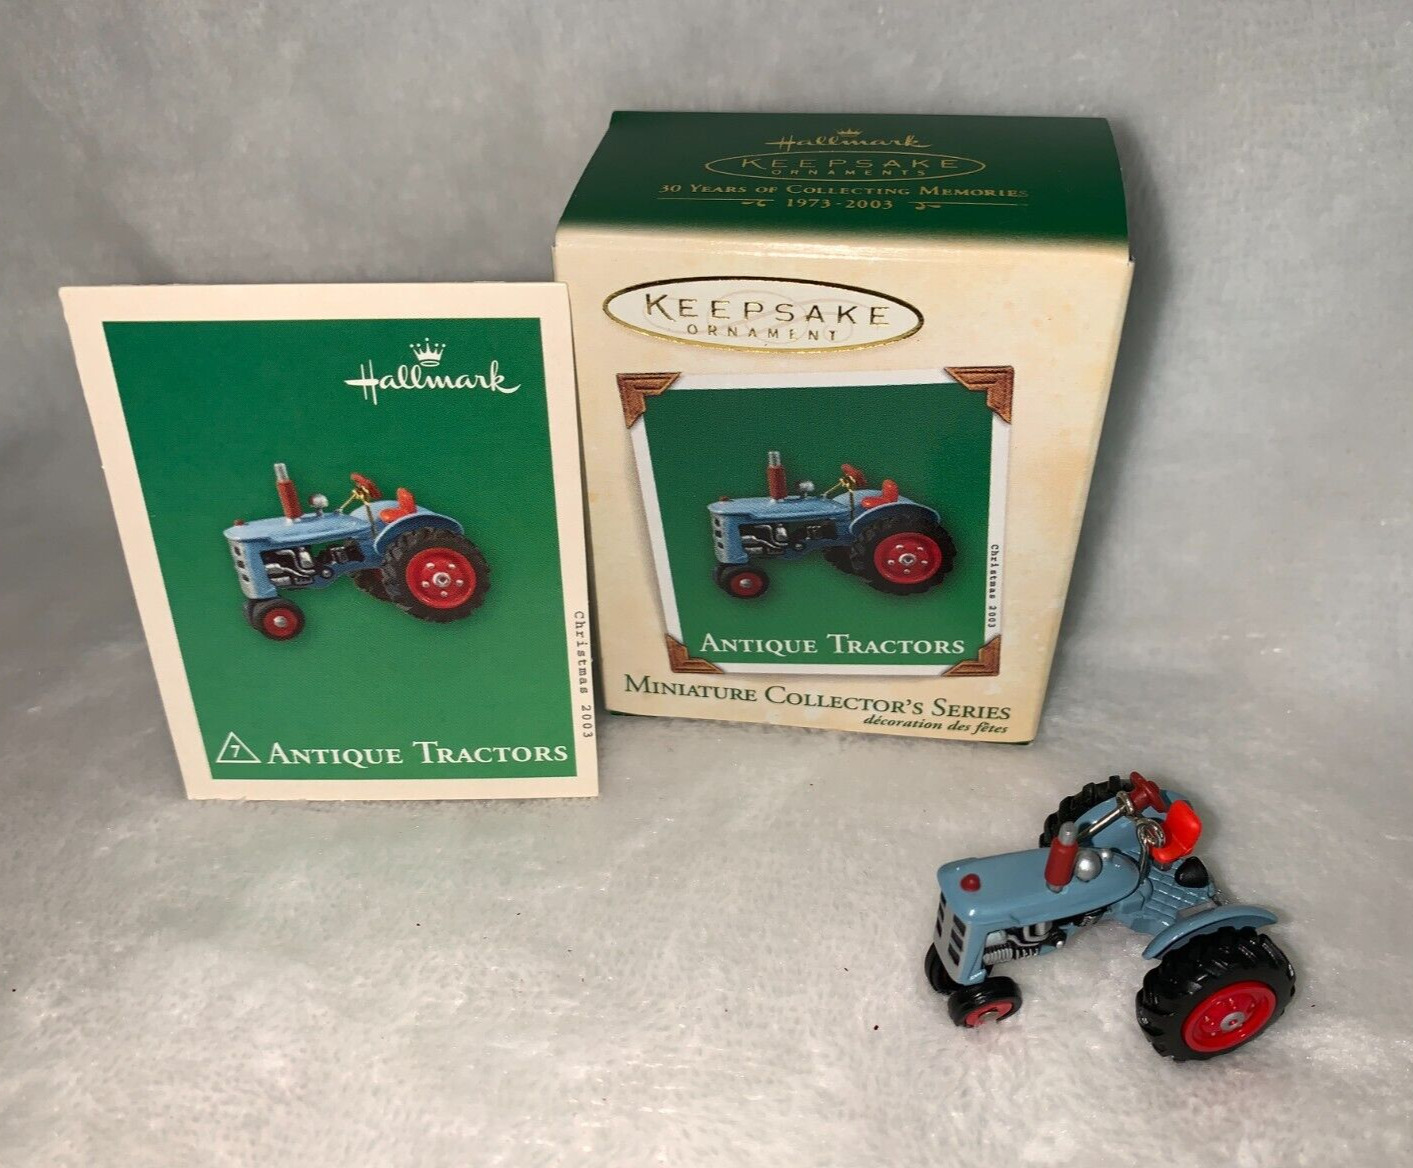 New 2003 Hallmark Antique Tractors Blue & Red Series Miniature Ornament #7